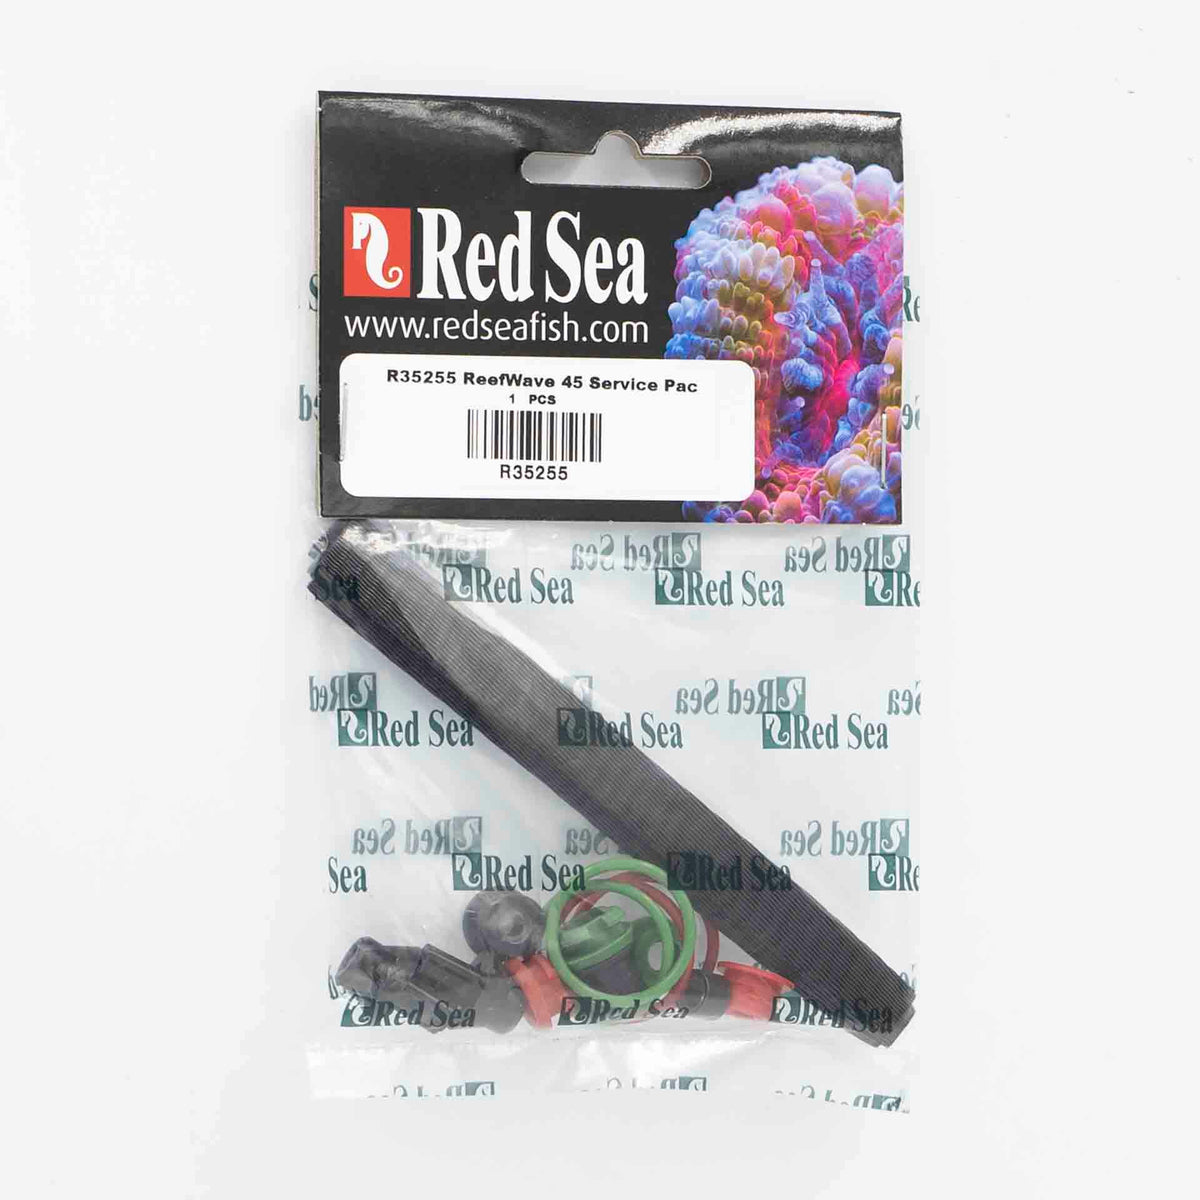 Red Sea Reefwave 45 Service Pack